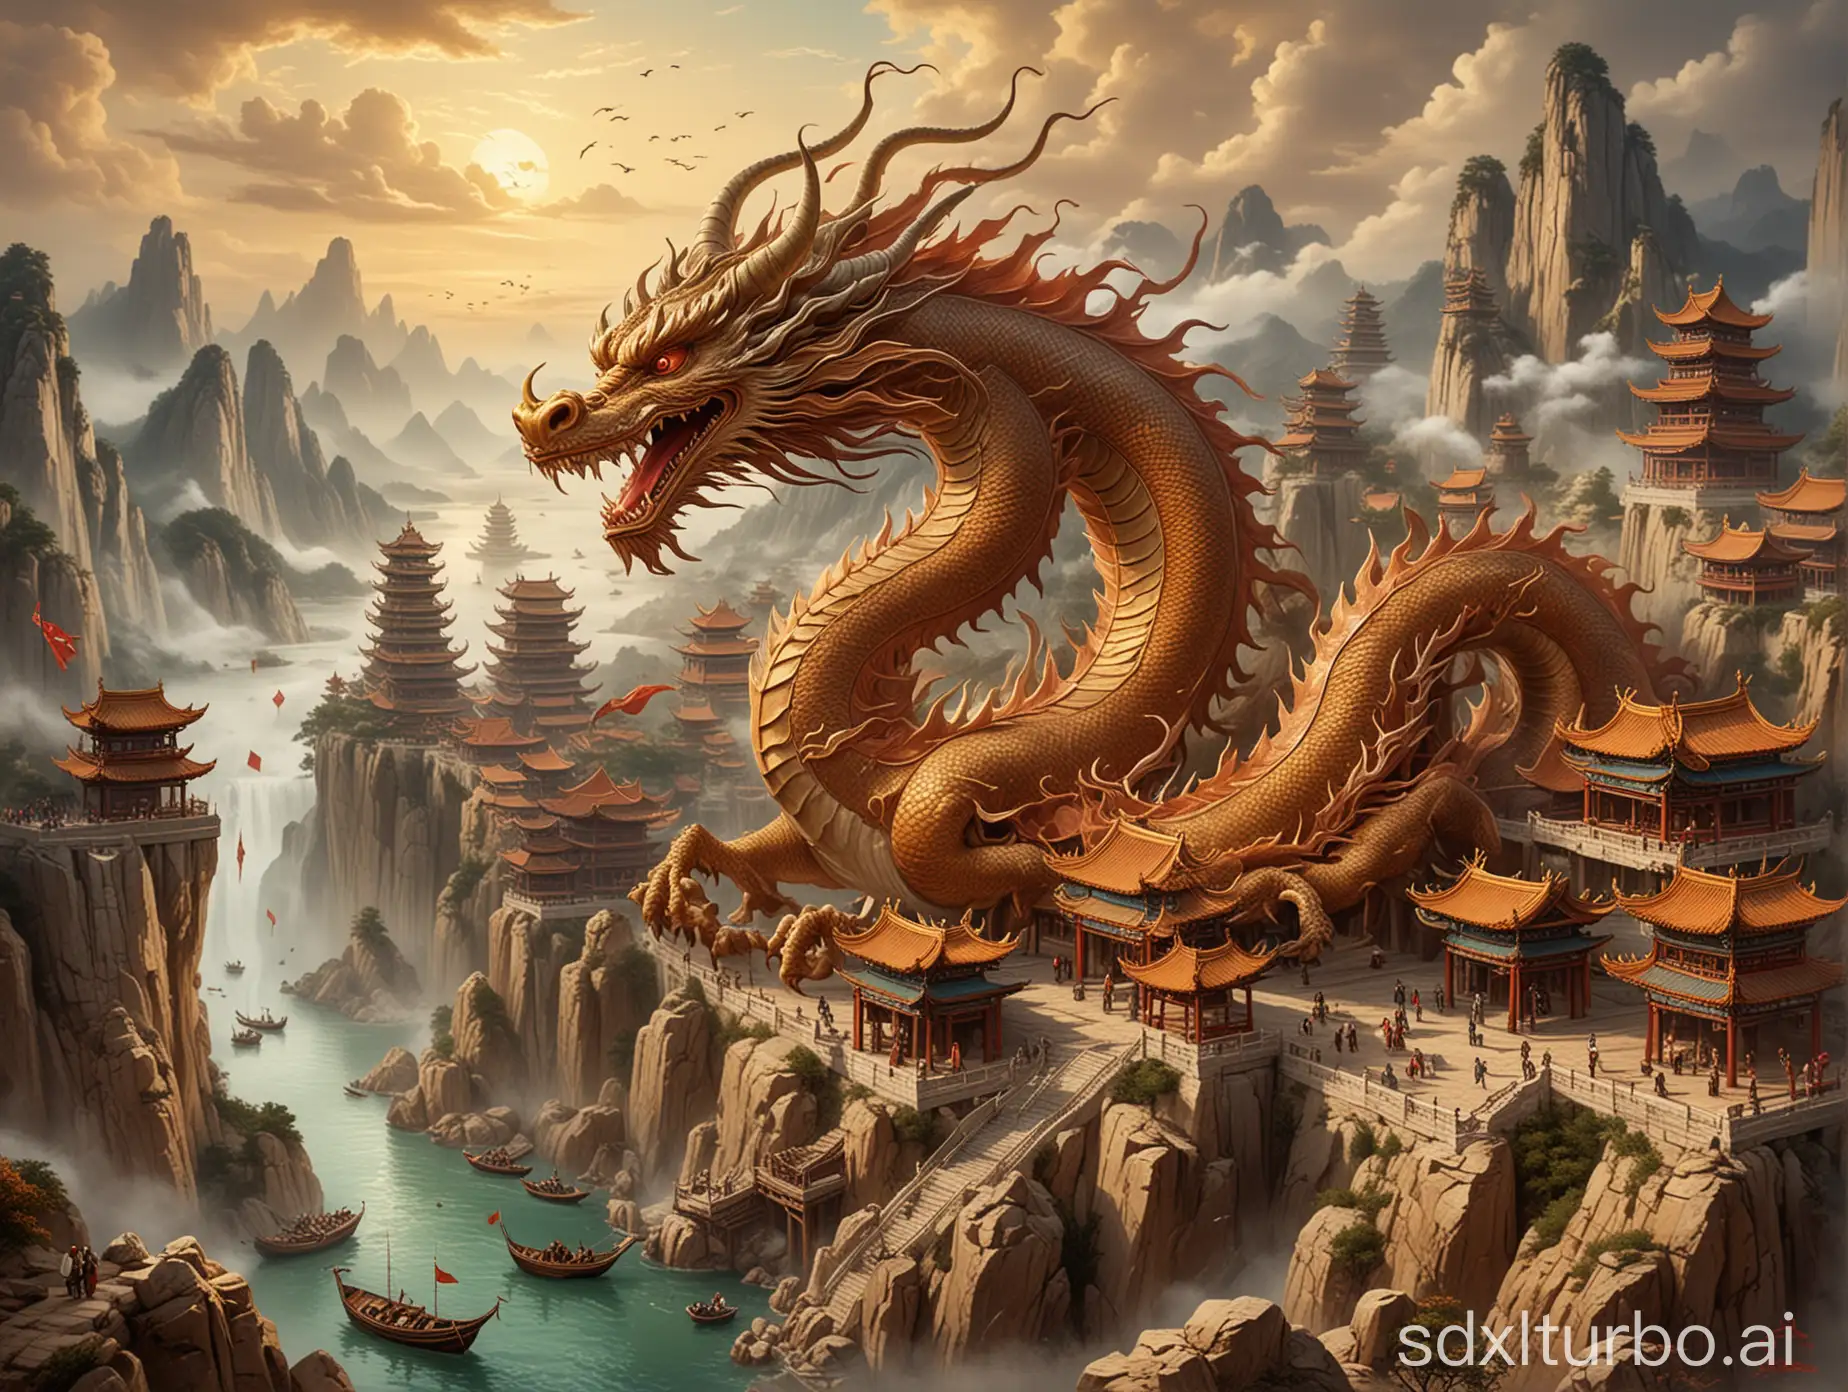 Chinese Dream, China's construction achievements, Chinese civilization, Chinese dragon